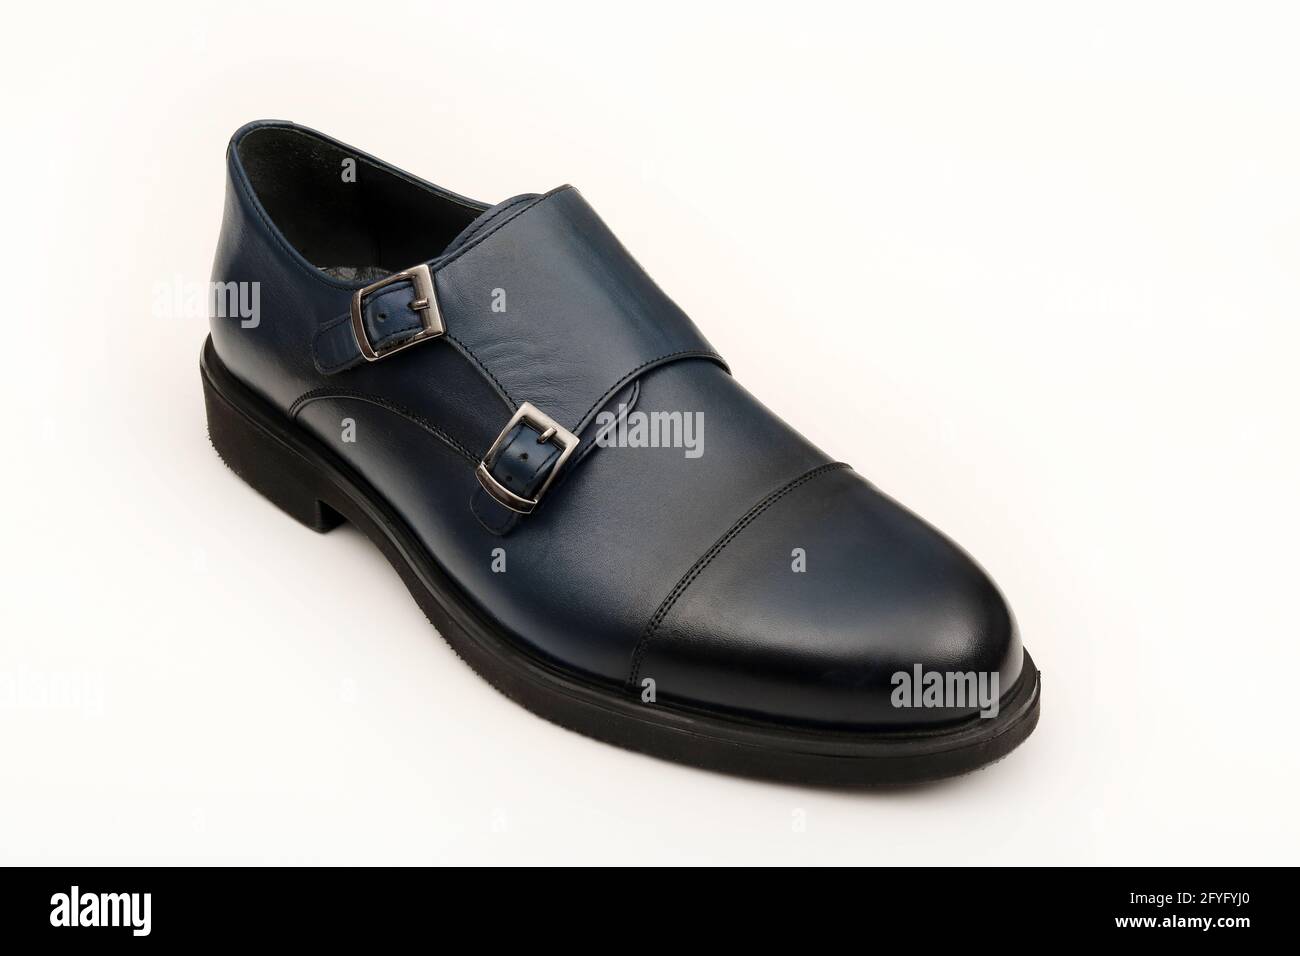 Classic black leather men's shoes Stock Photo - Alamy